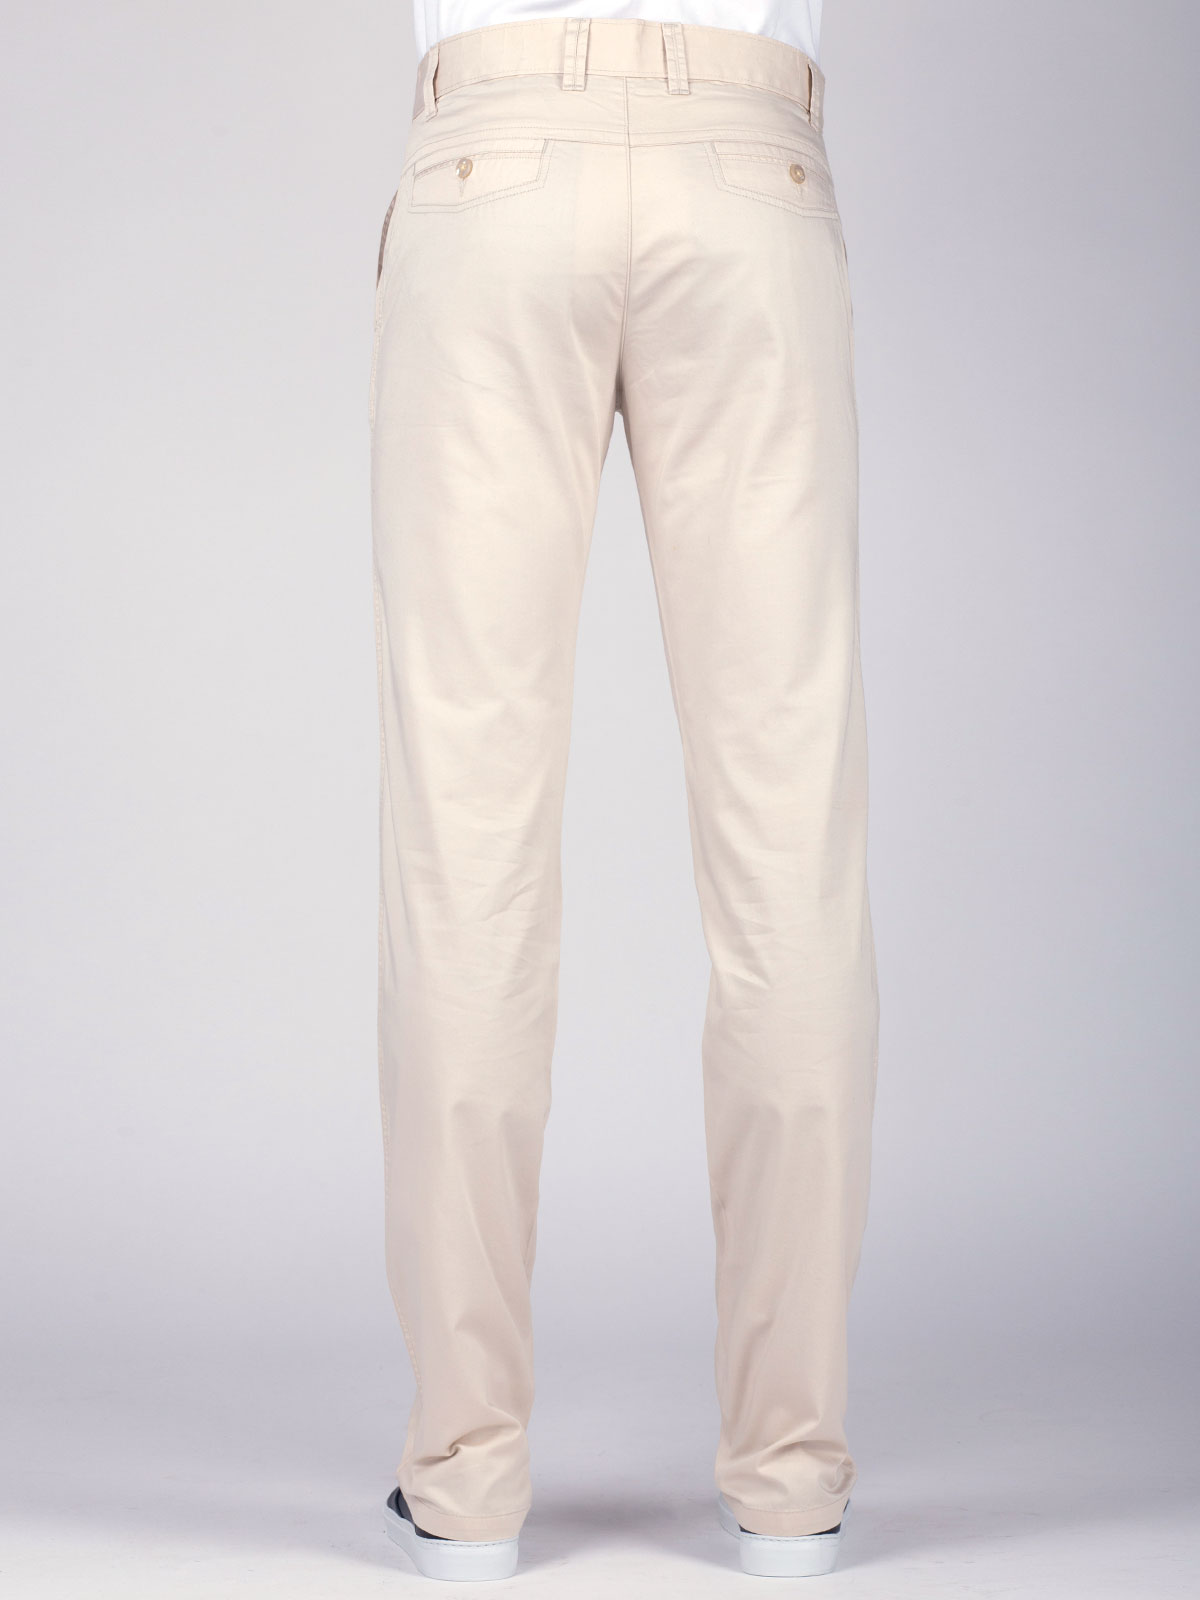 Light beige summer pants - 63007 € 11.25 img3